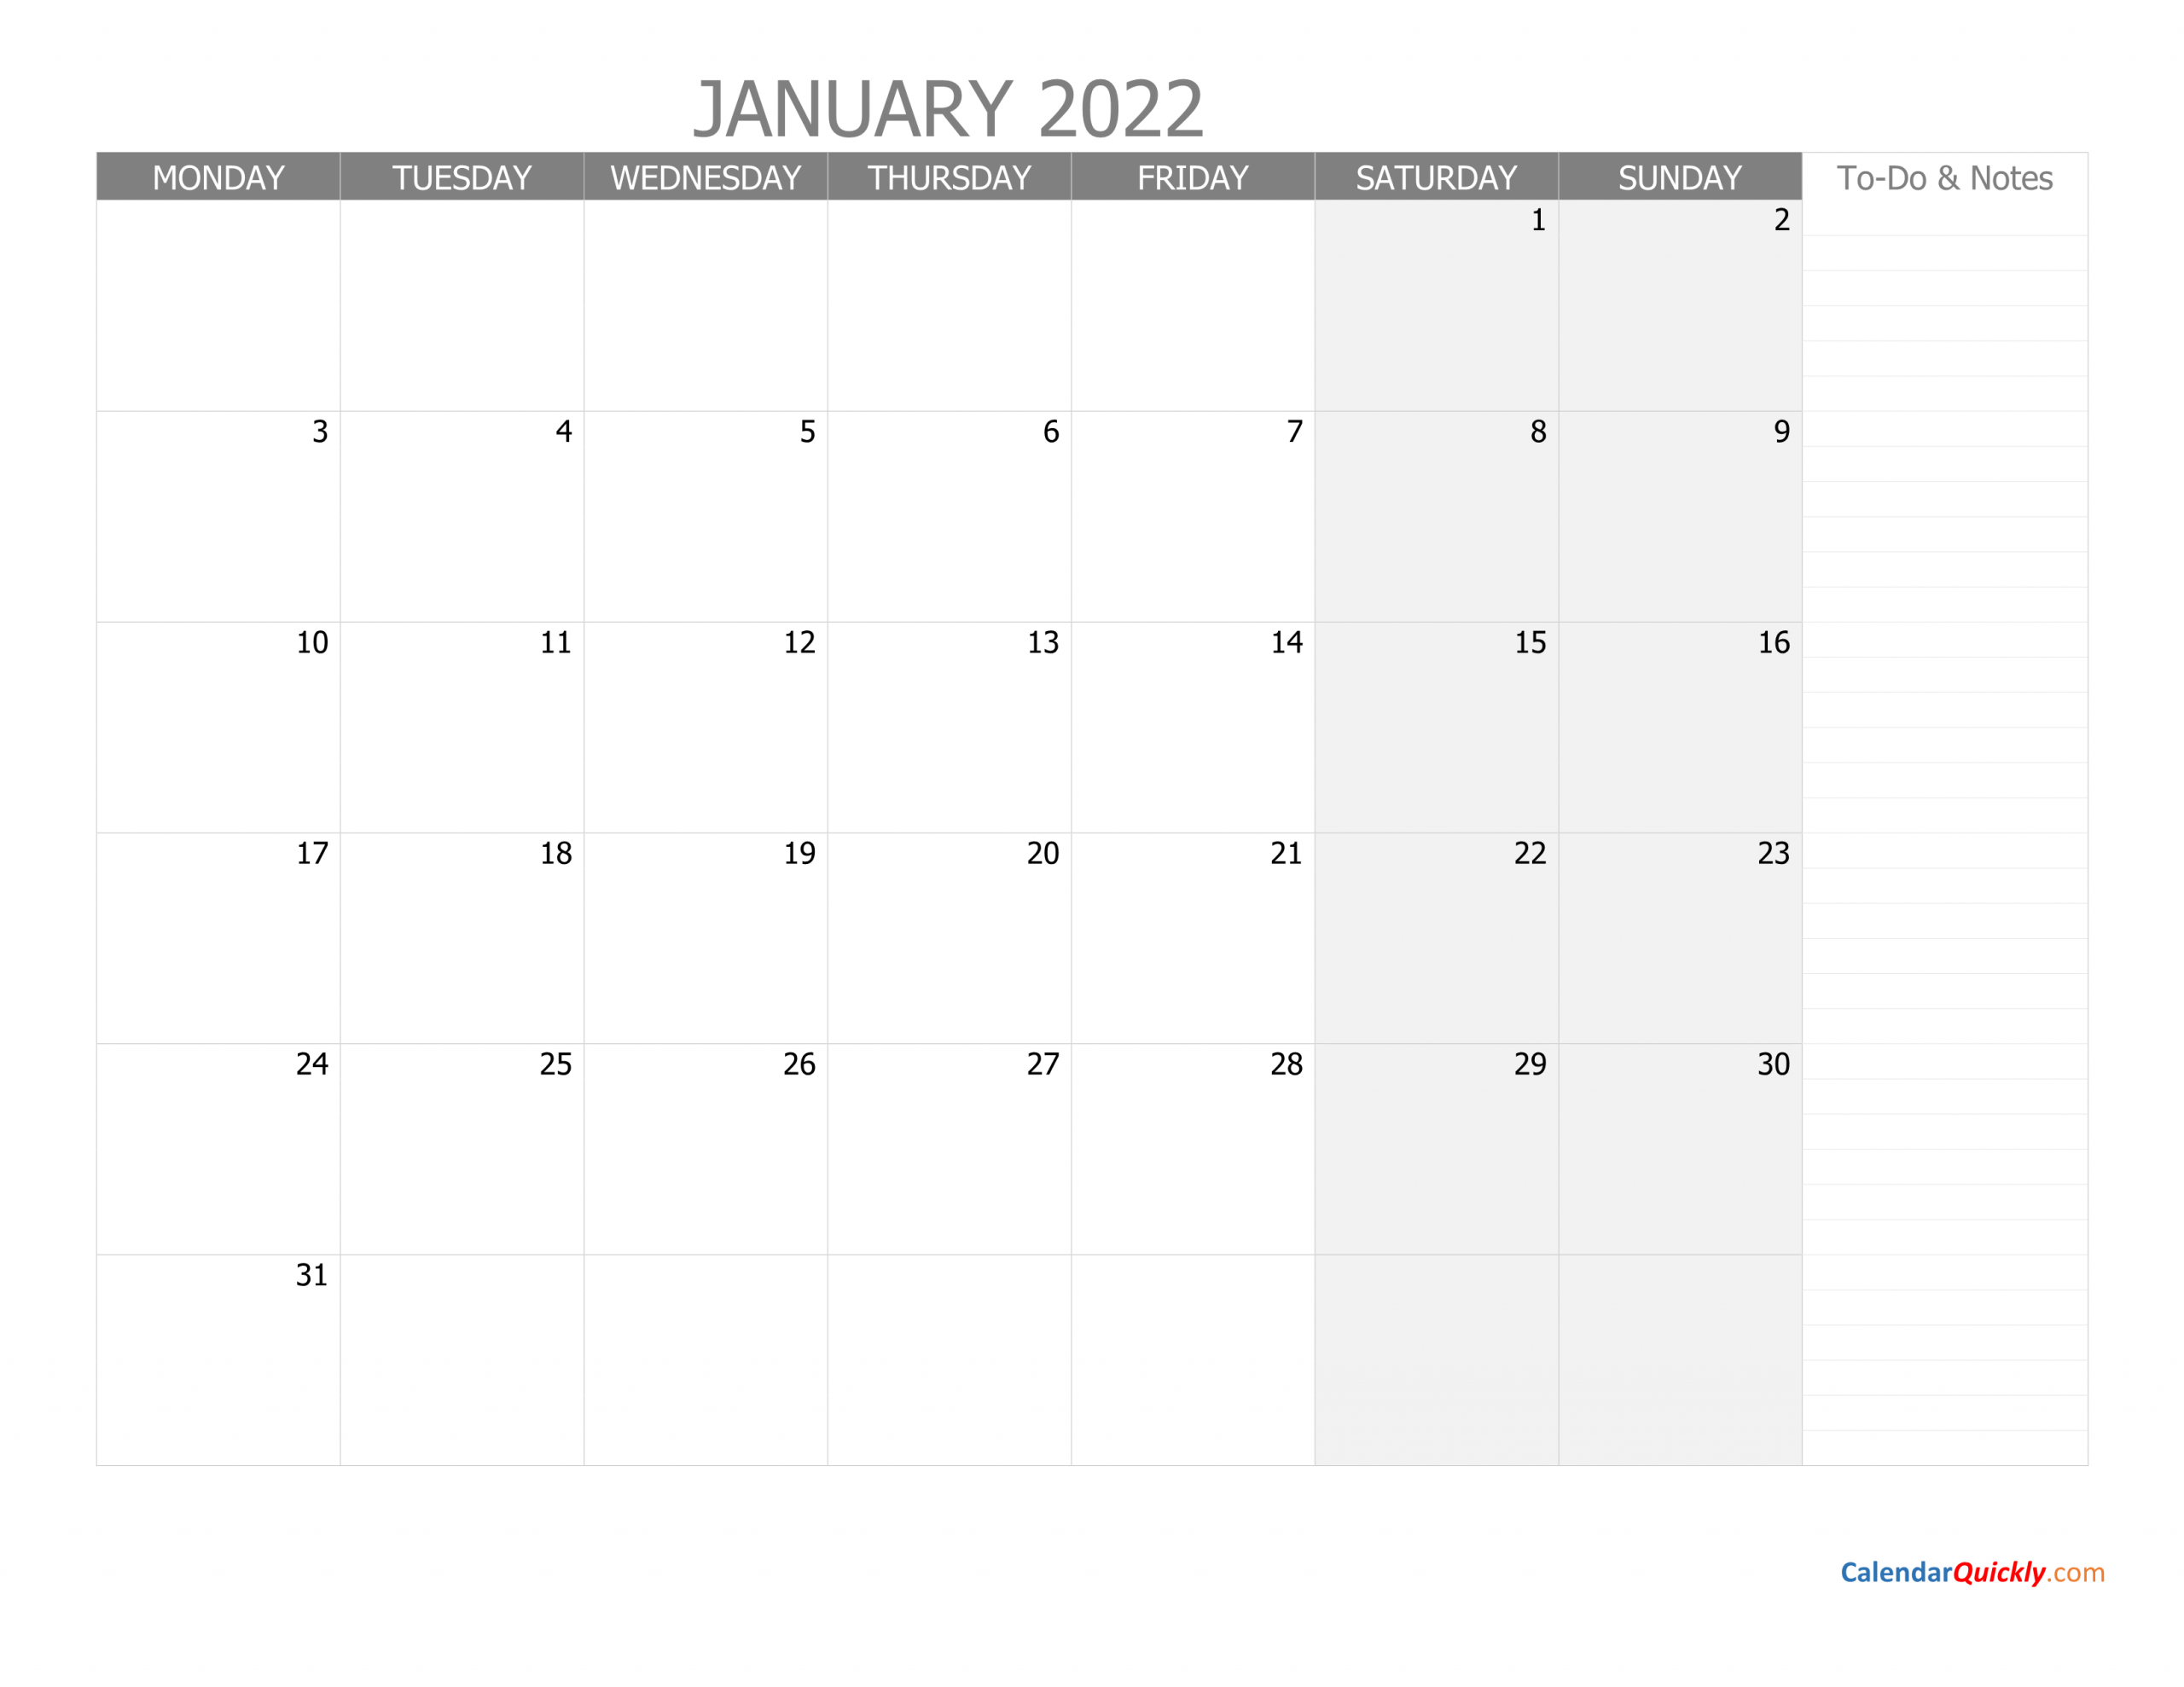 January Monday Calendar 2022 With Notes | Calendar Quickly